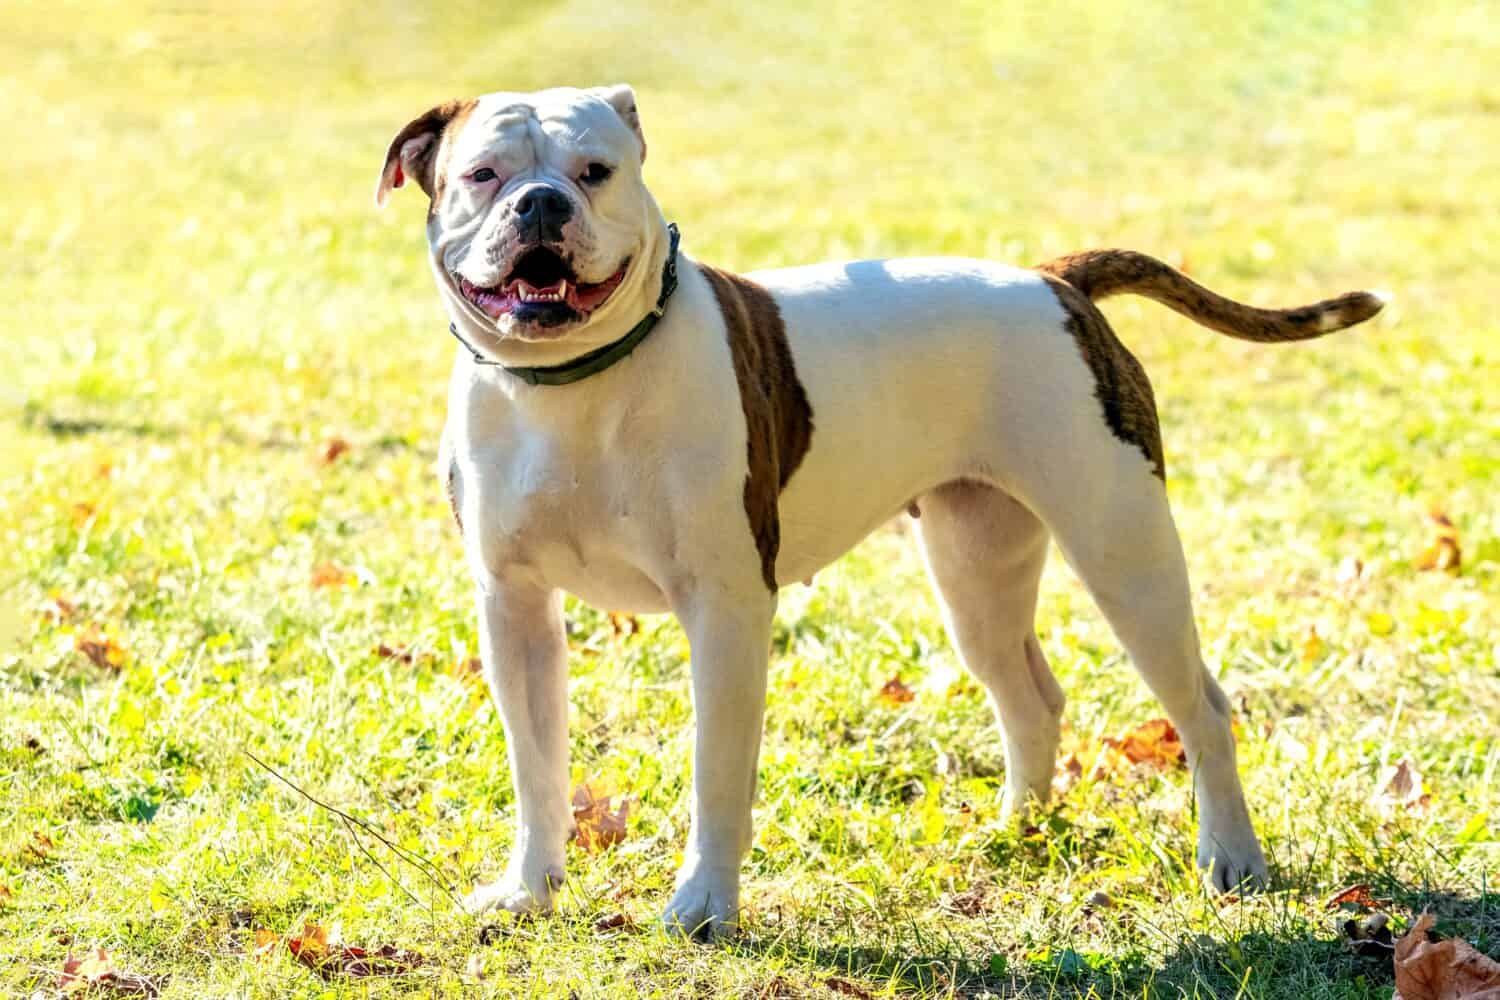 Dog breed American Bulldog on a leash in sunny weather. Portrait of a dog